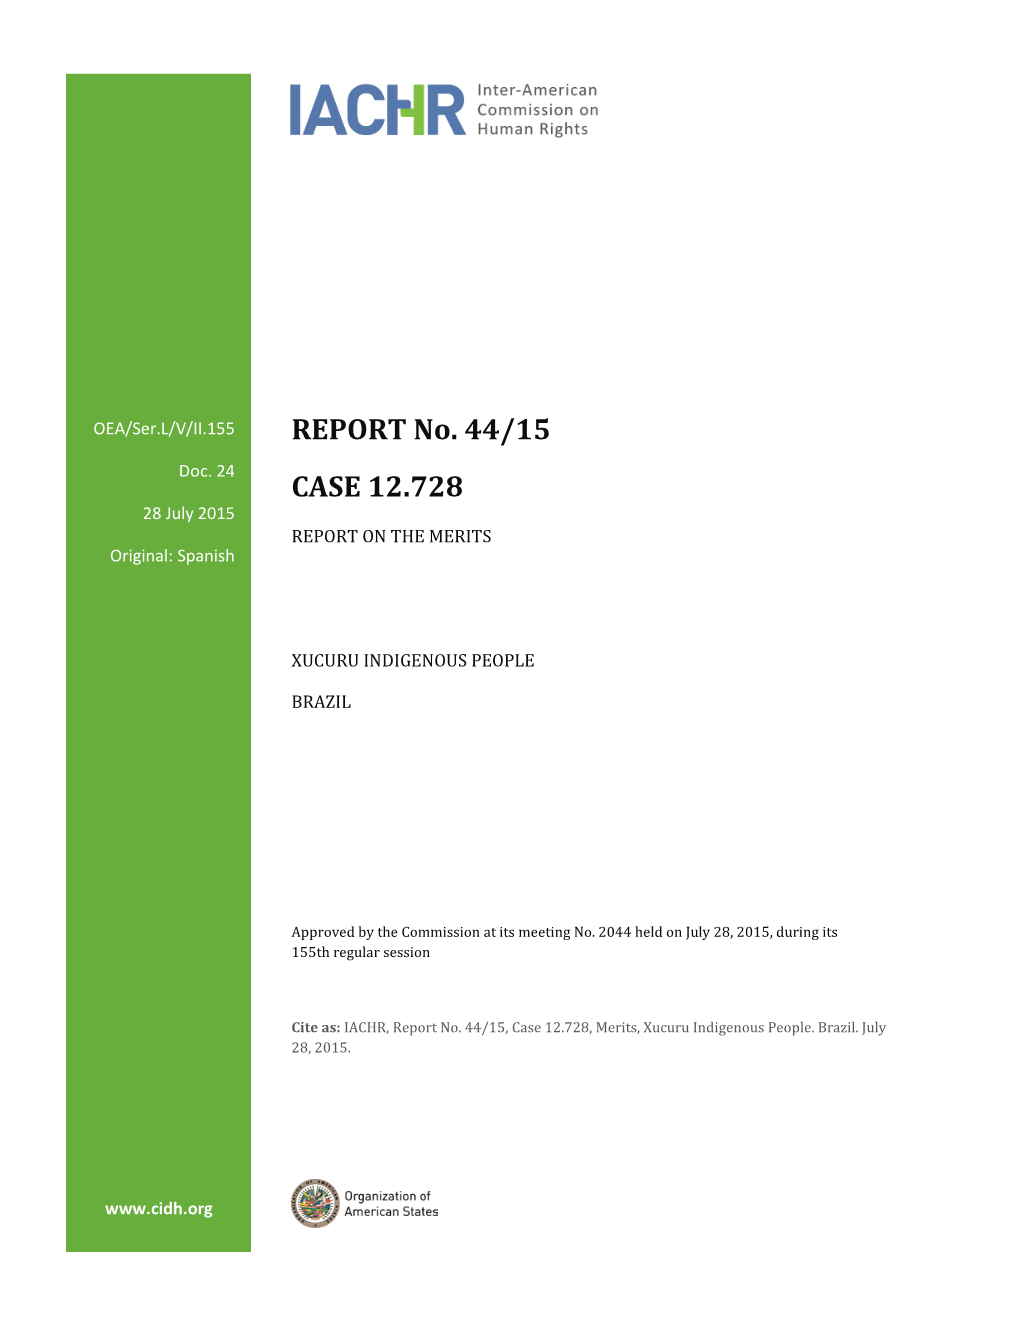 REPORT No. 44/15 CASE 12.728